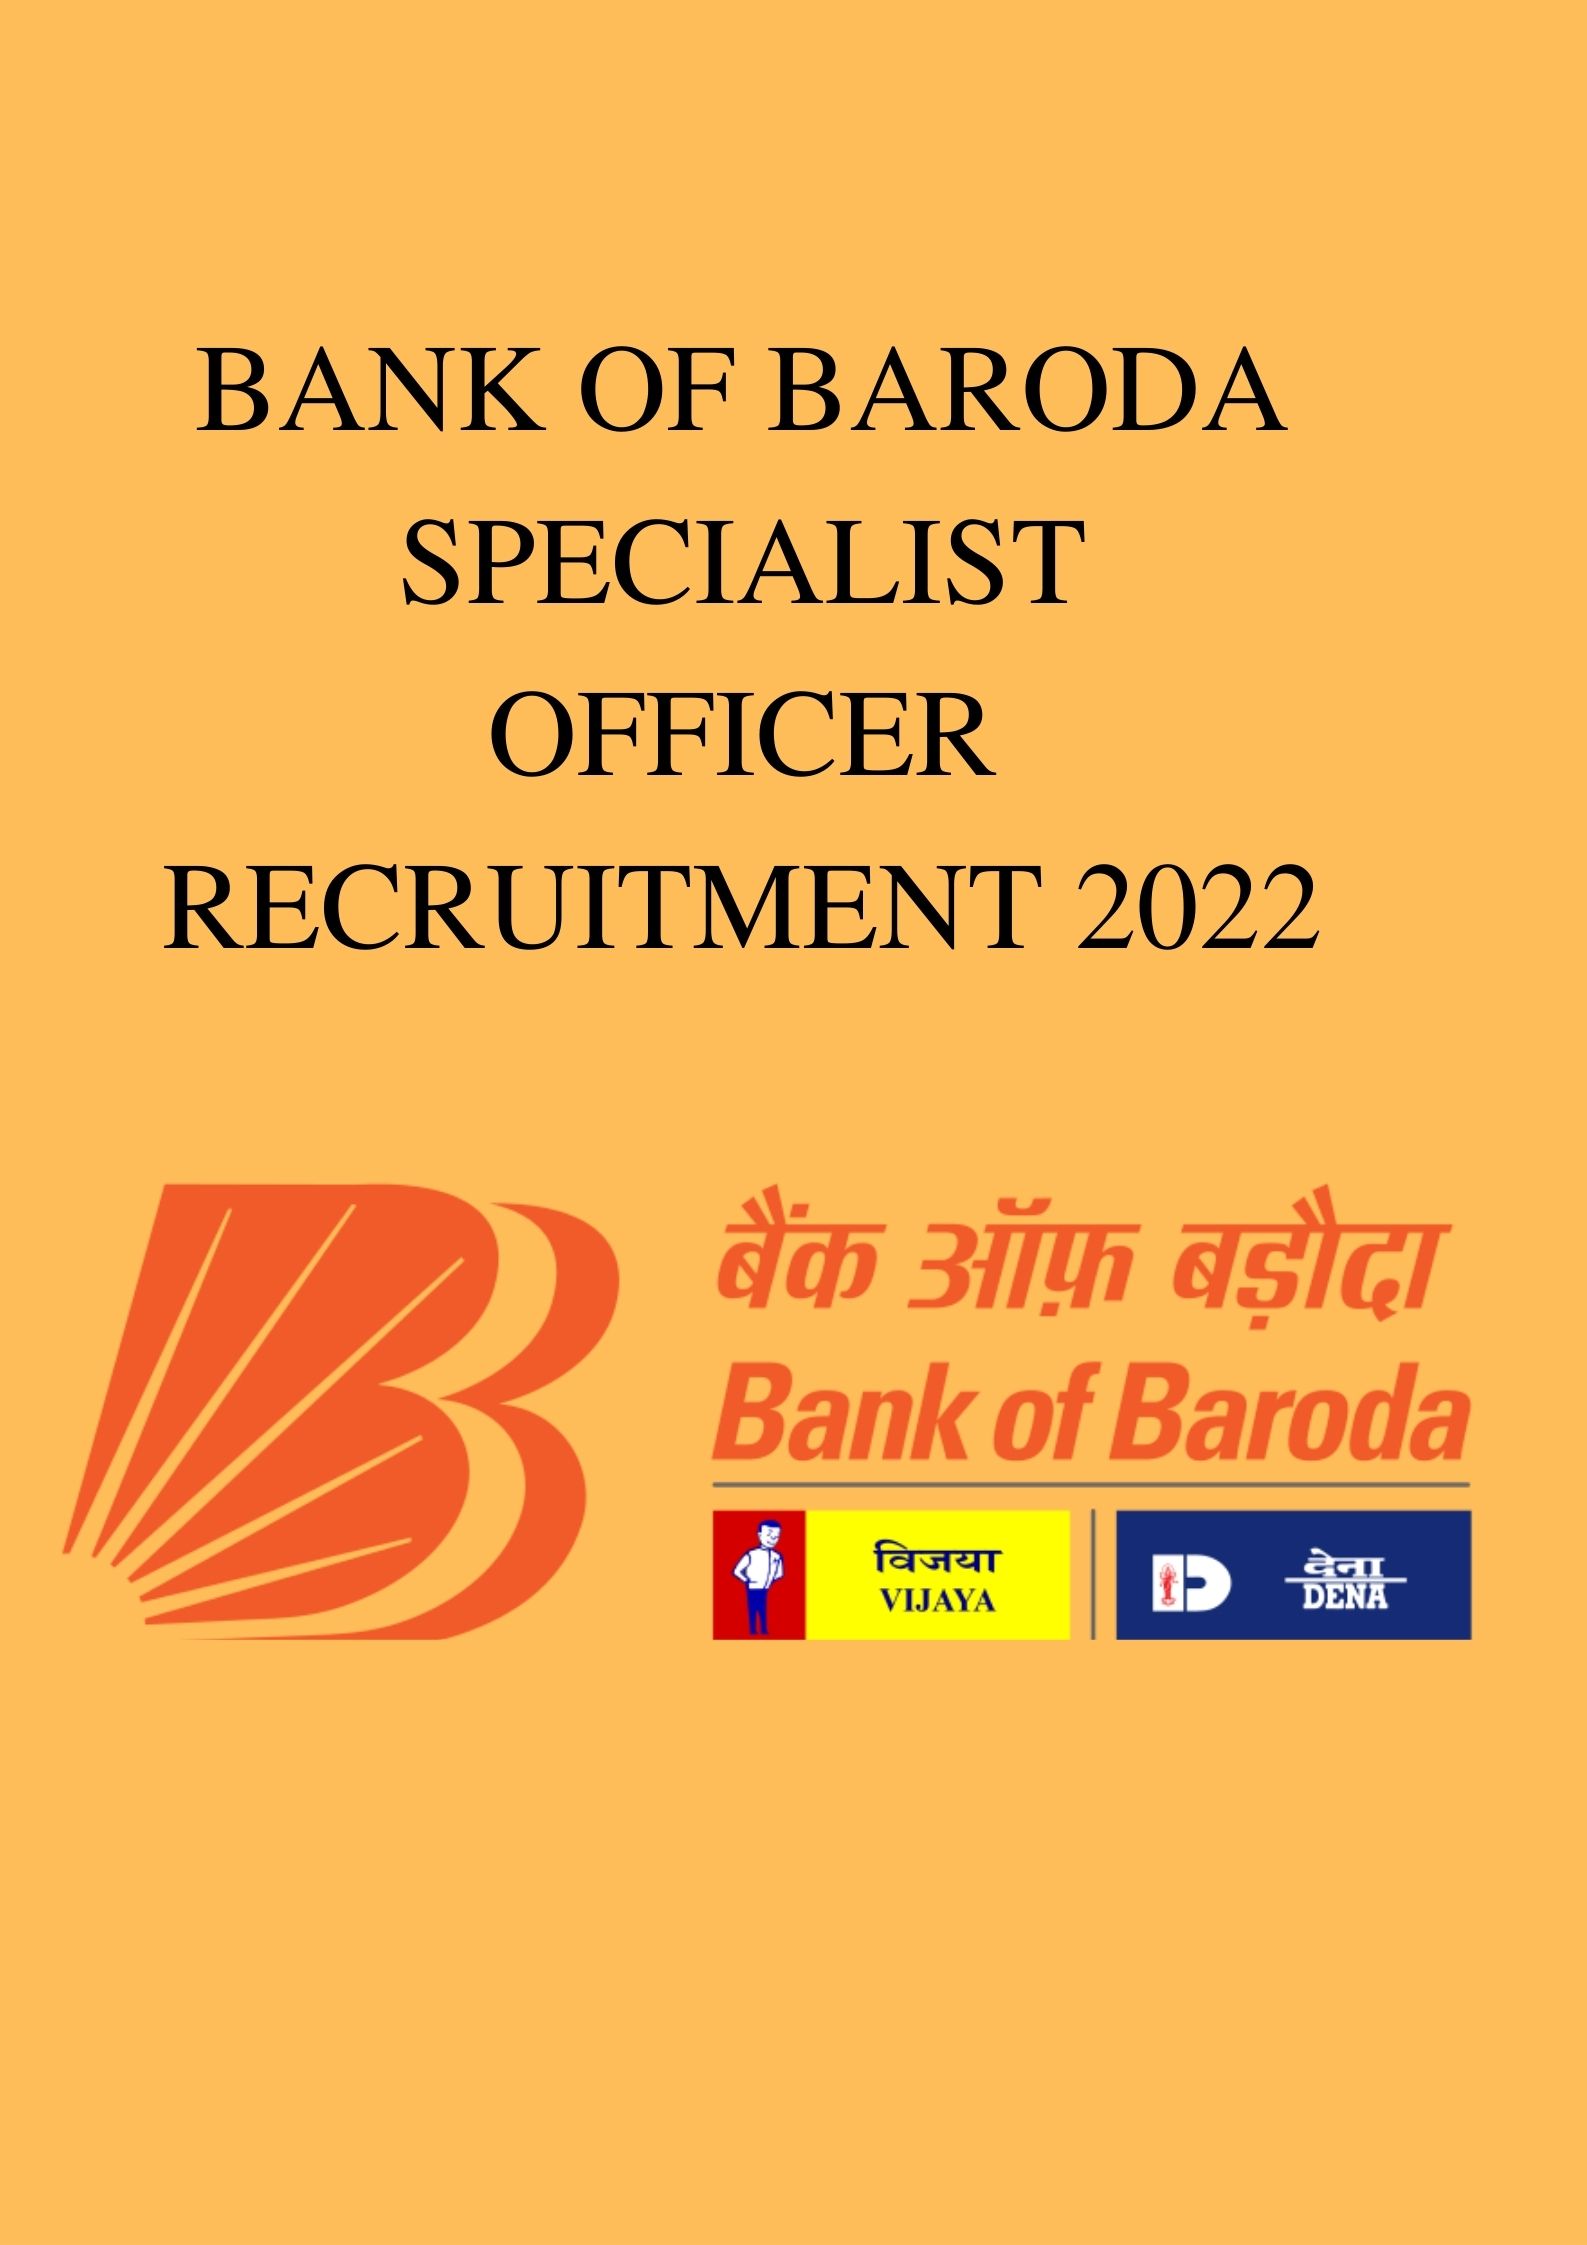 BANK OF BARODA SPECIALIST OFFICER RECRUITMENT 2022